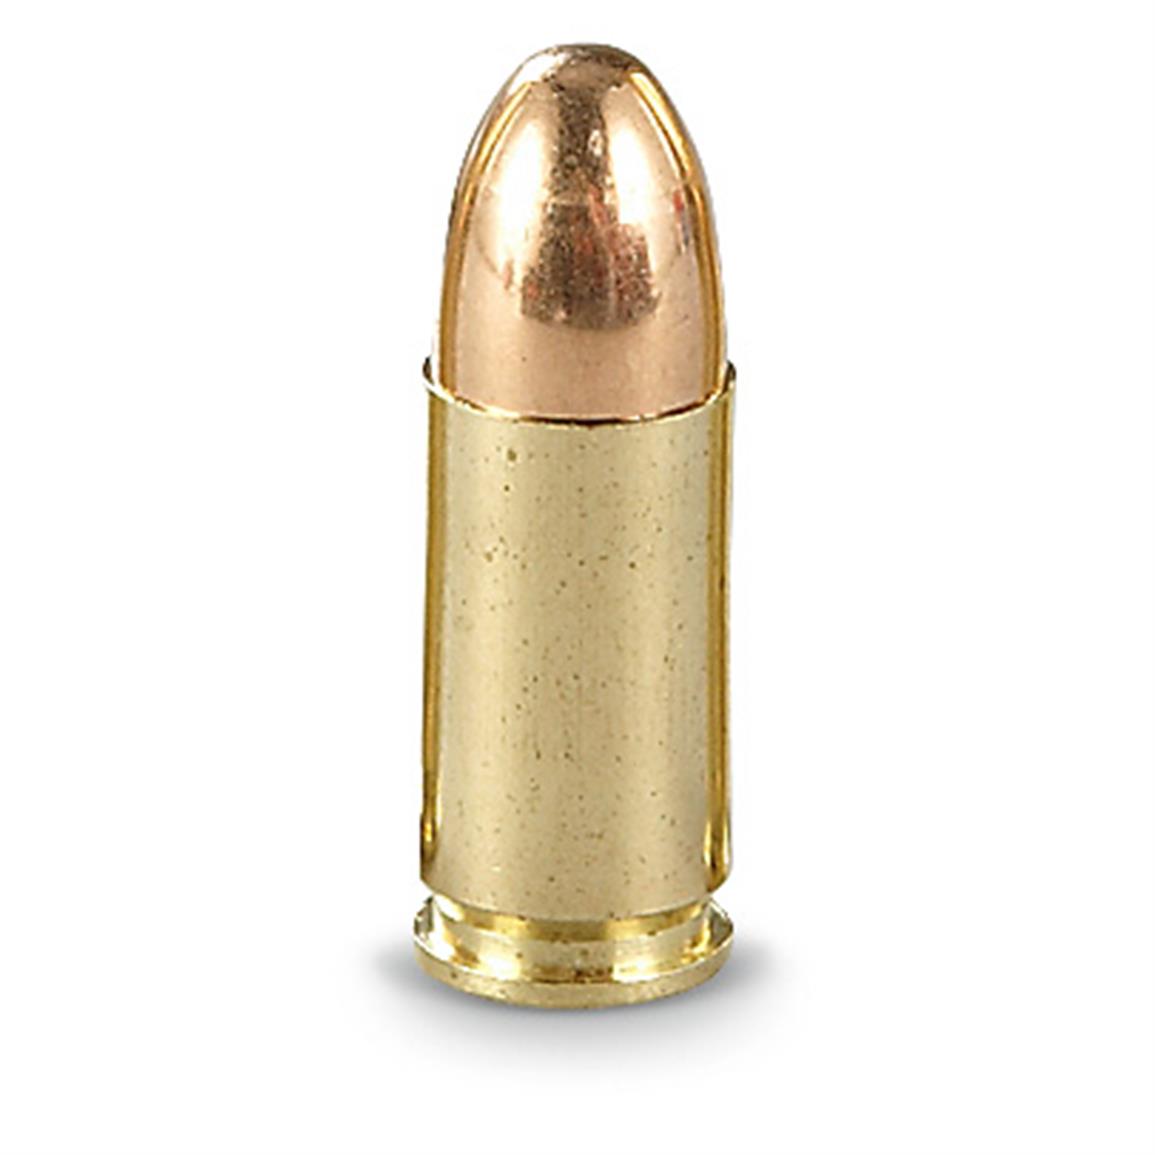 9mm Bullets